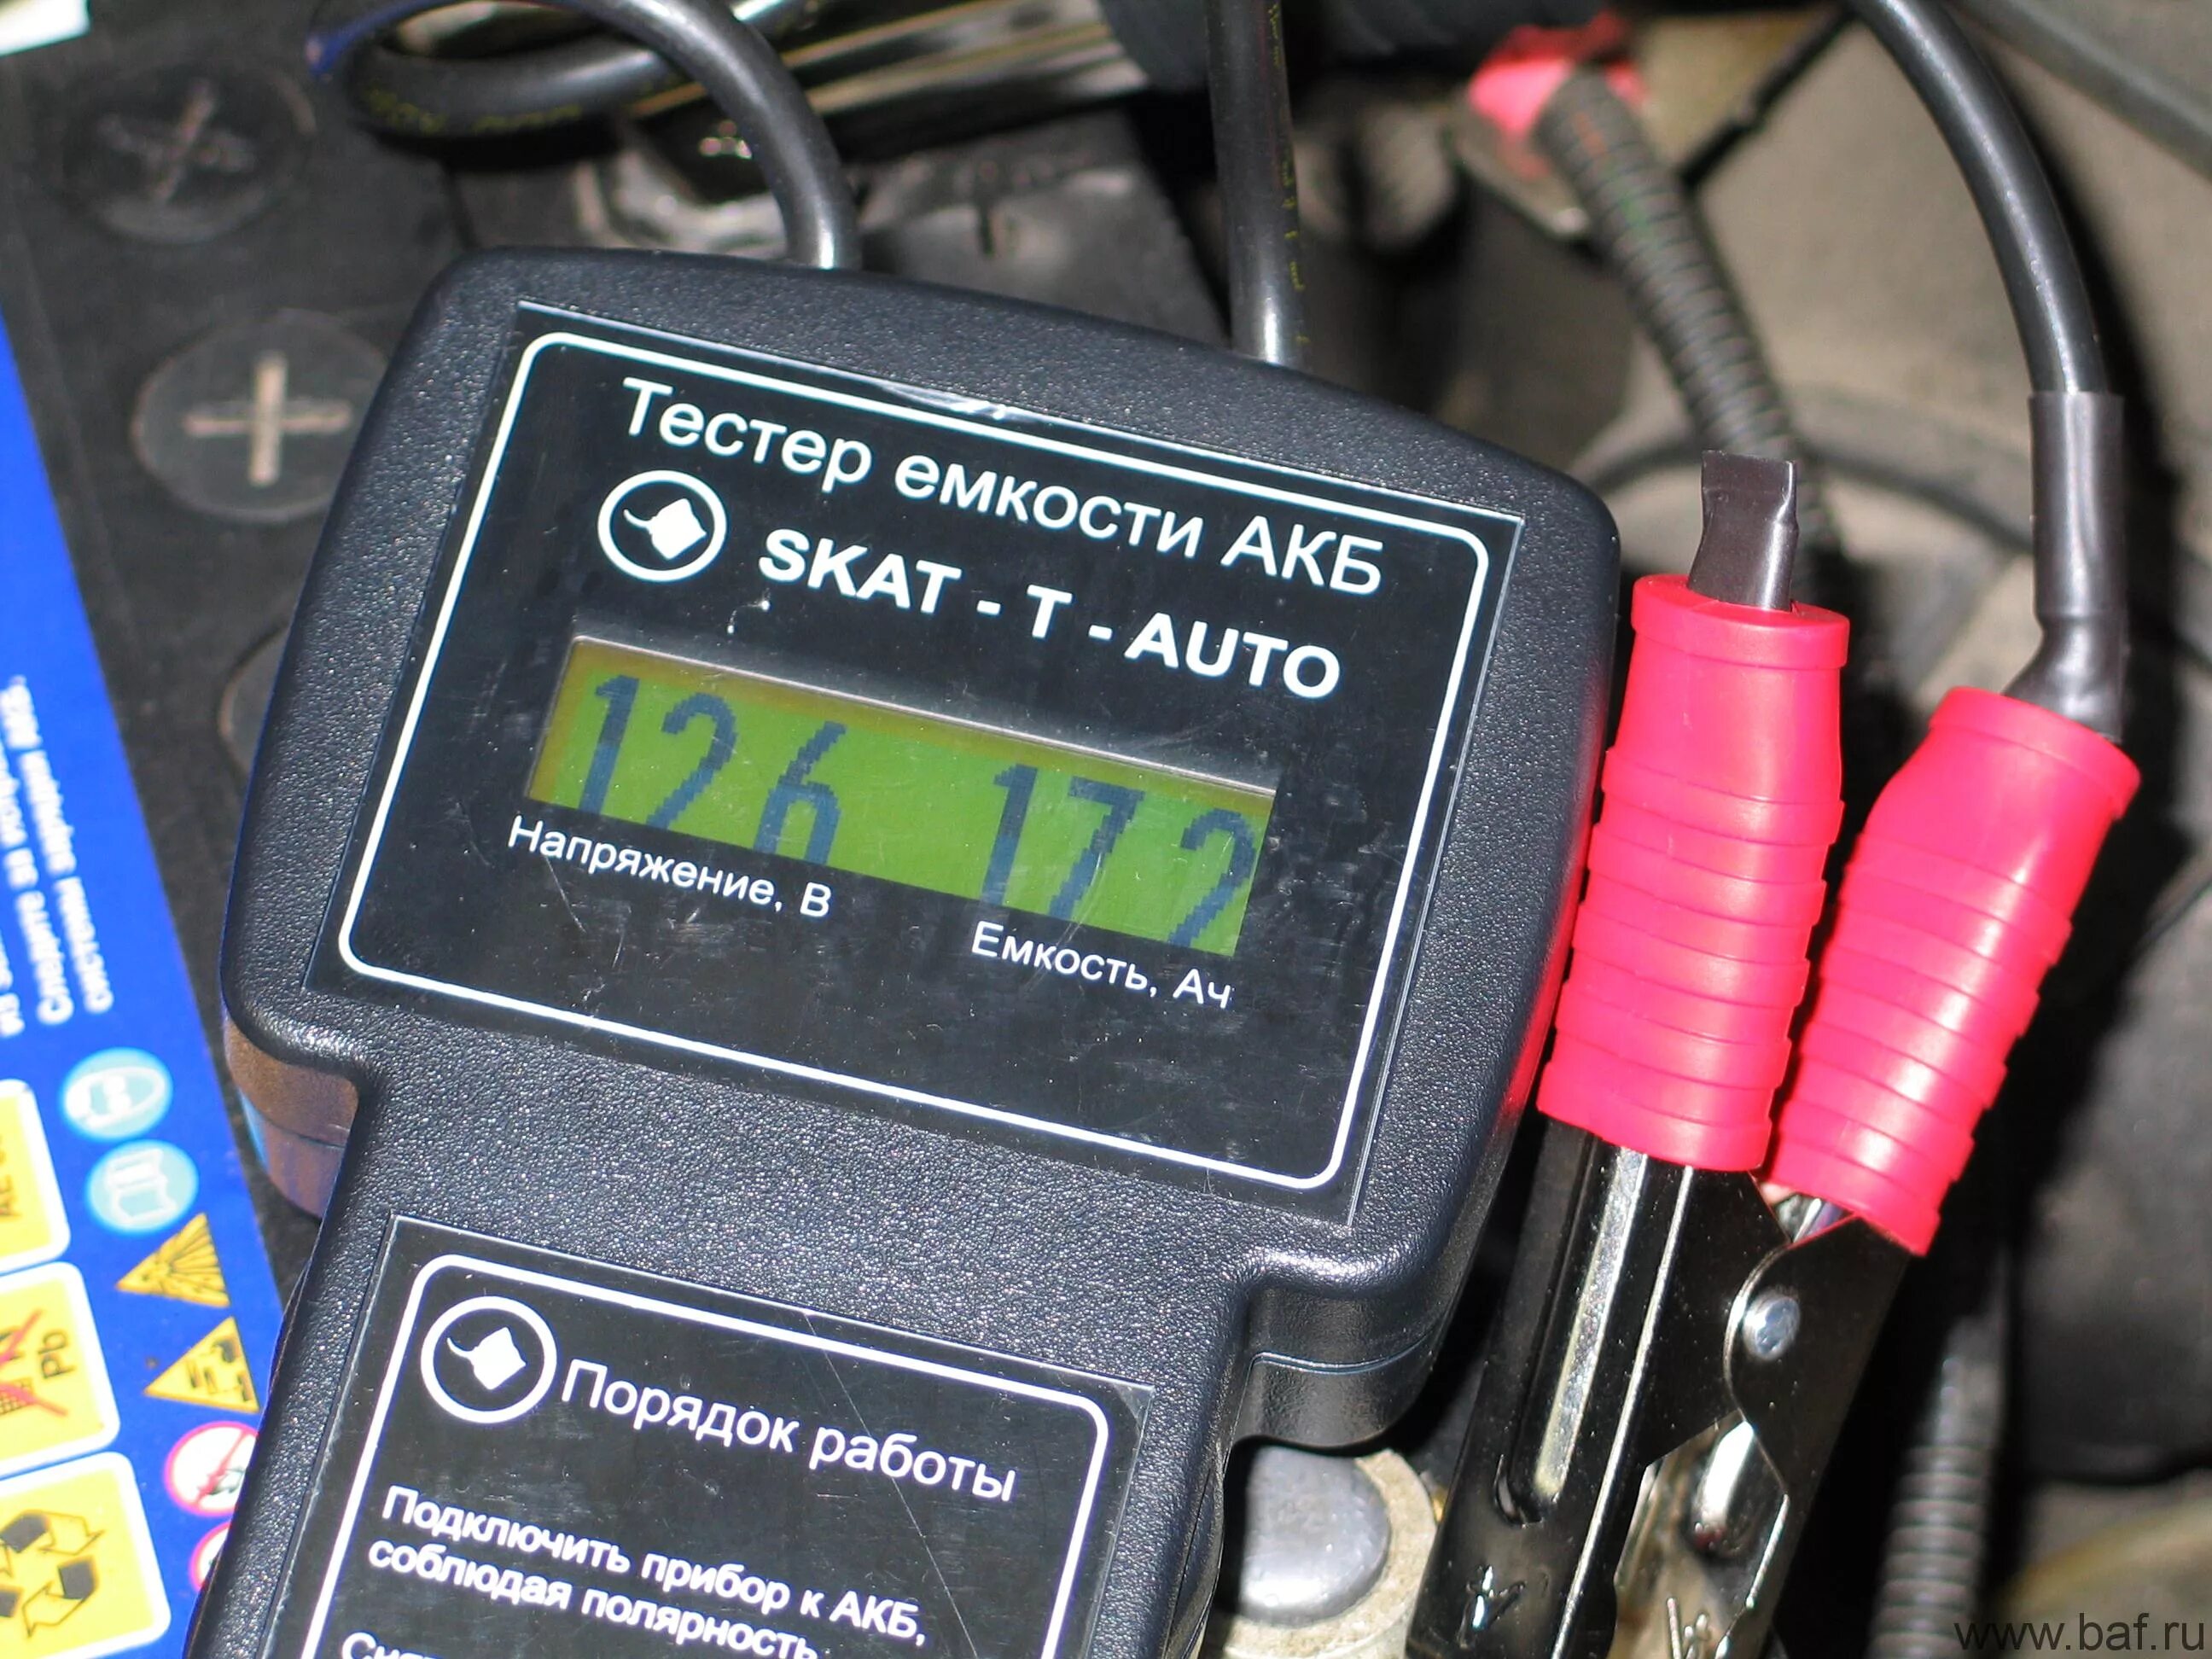 Аккумулятор зарядили емкость. Тестер ёмкости АКБ Skat-t-auto. Тестер емкости аккумулятора Skat t. Мультиметр для проверки ёмкости АКБ автомобиля 12в. Тестер емкости аккумулятора "Калибр".